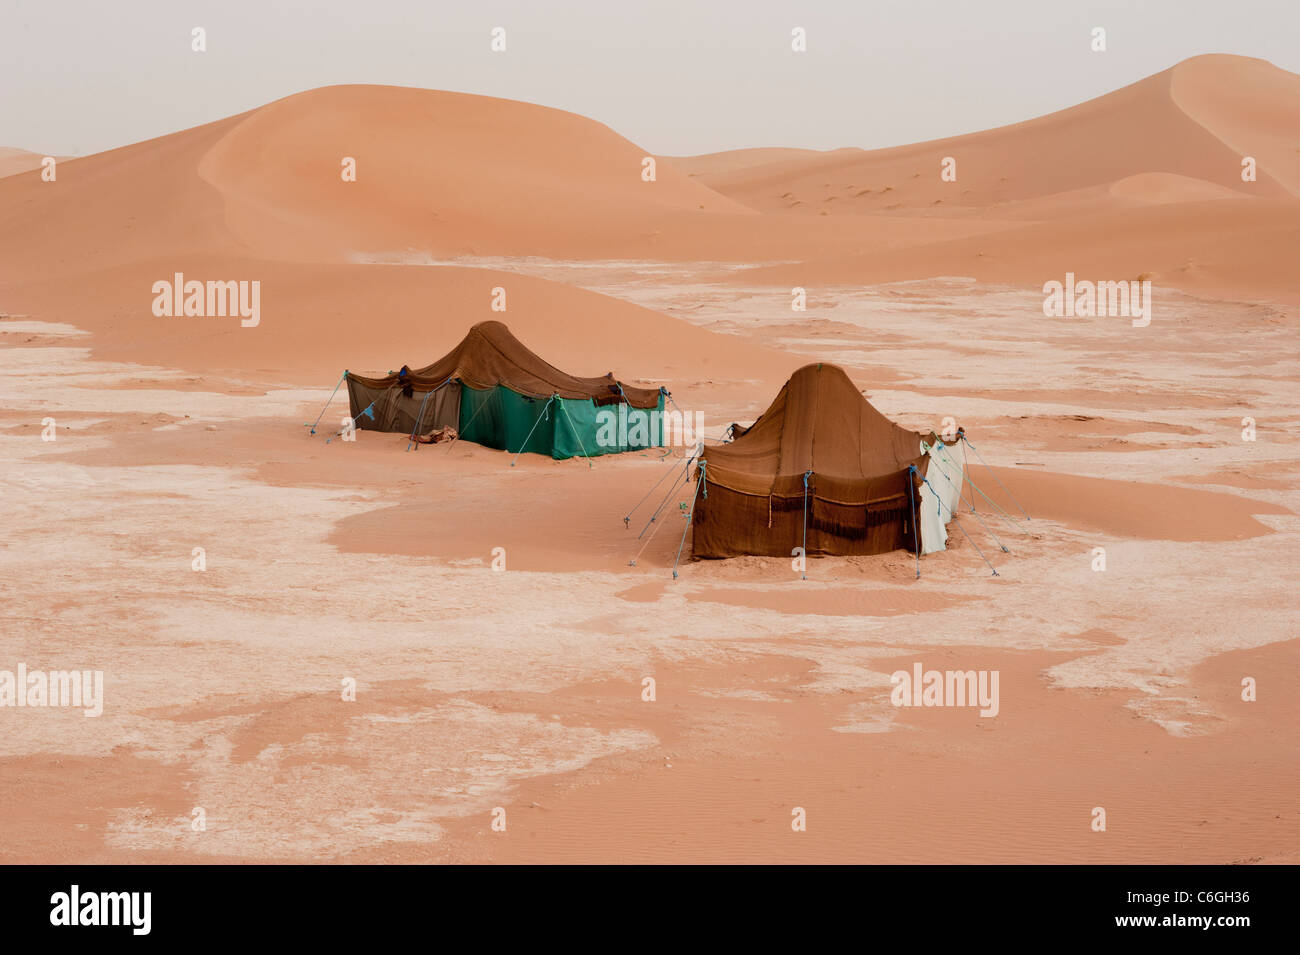 Bedouin tent in the Saharan sand dunes, Morocco. Stock Photo